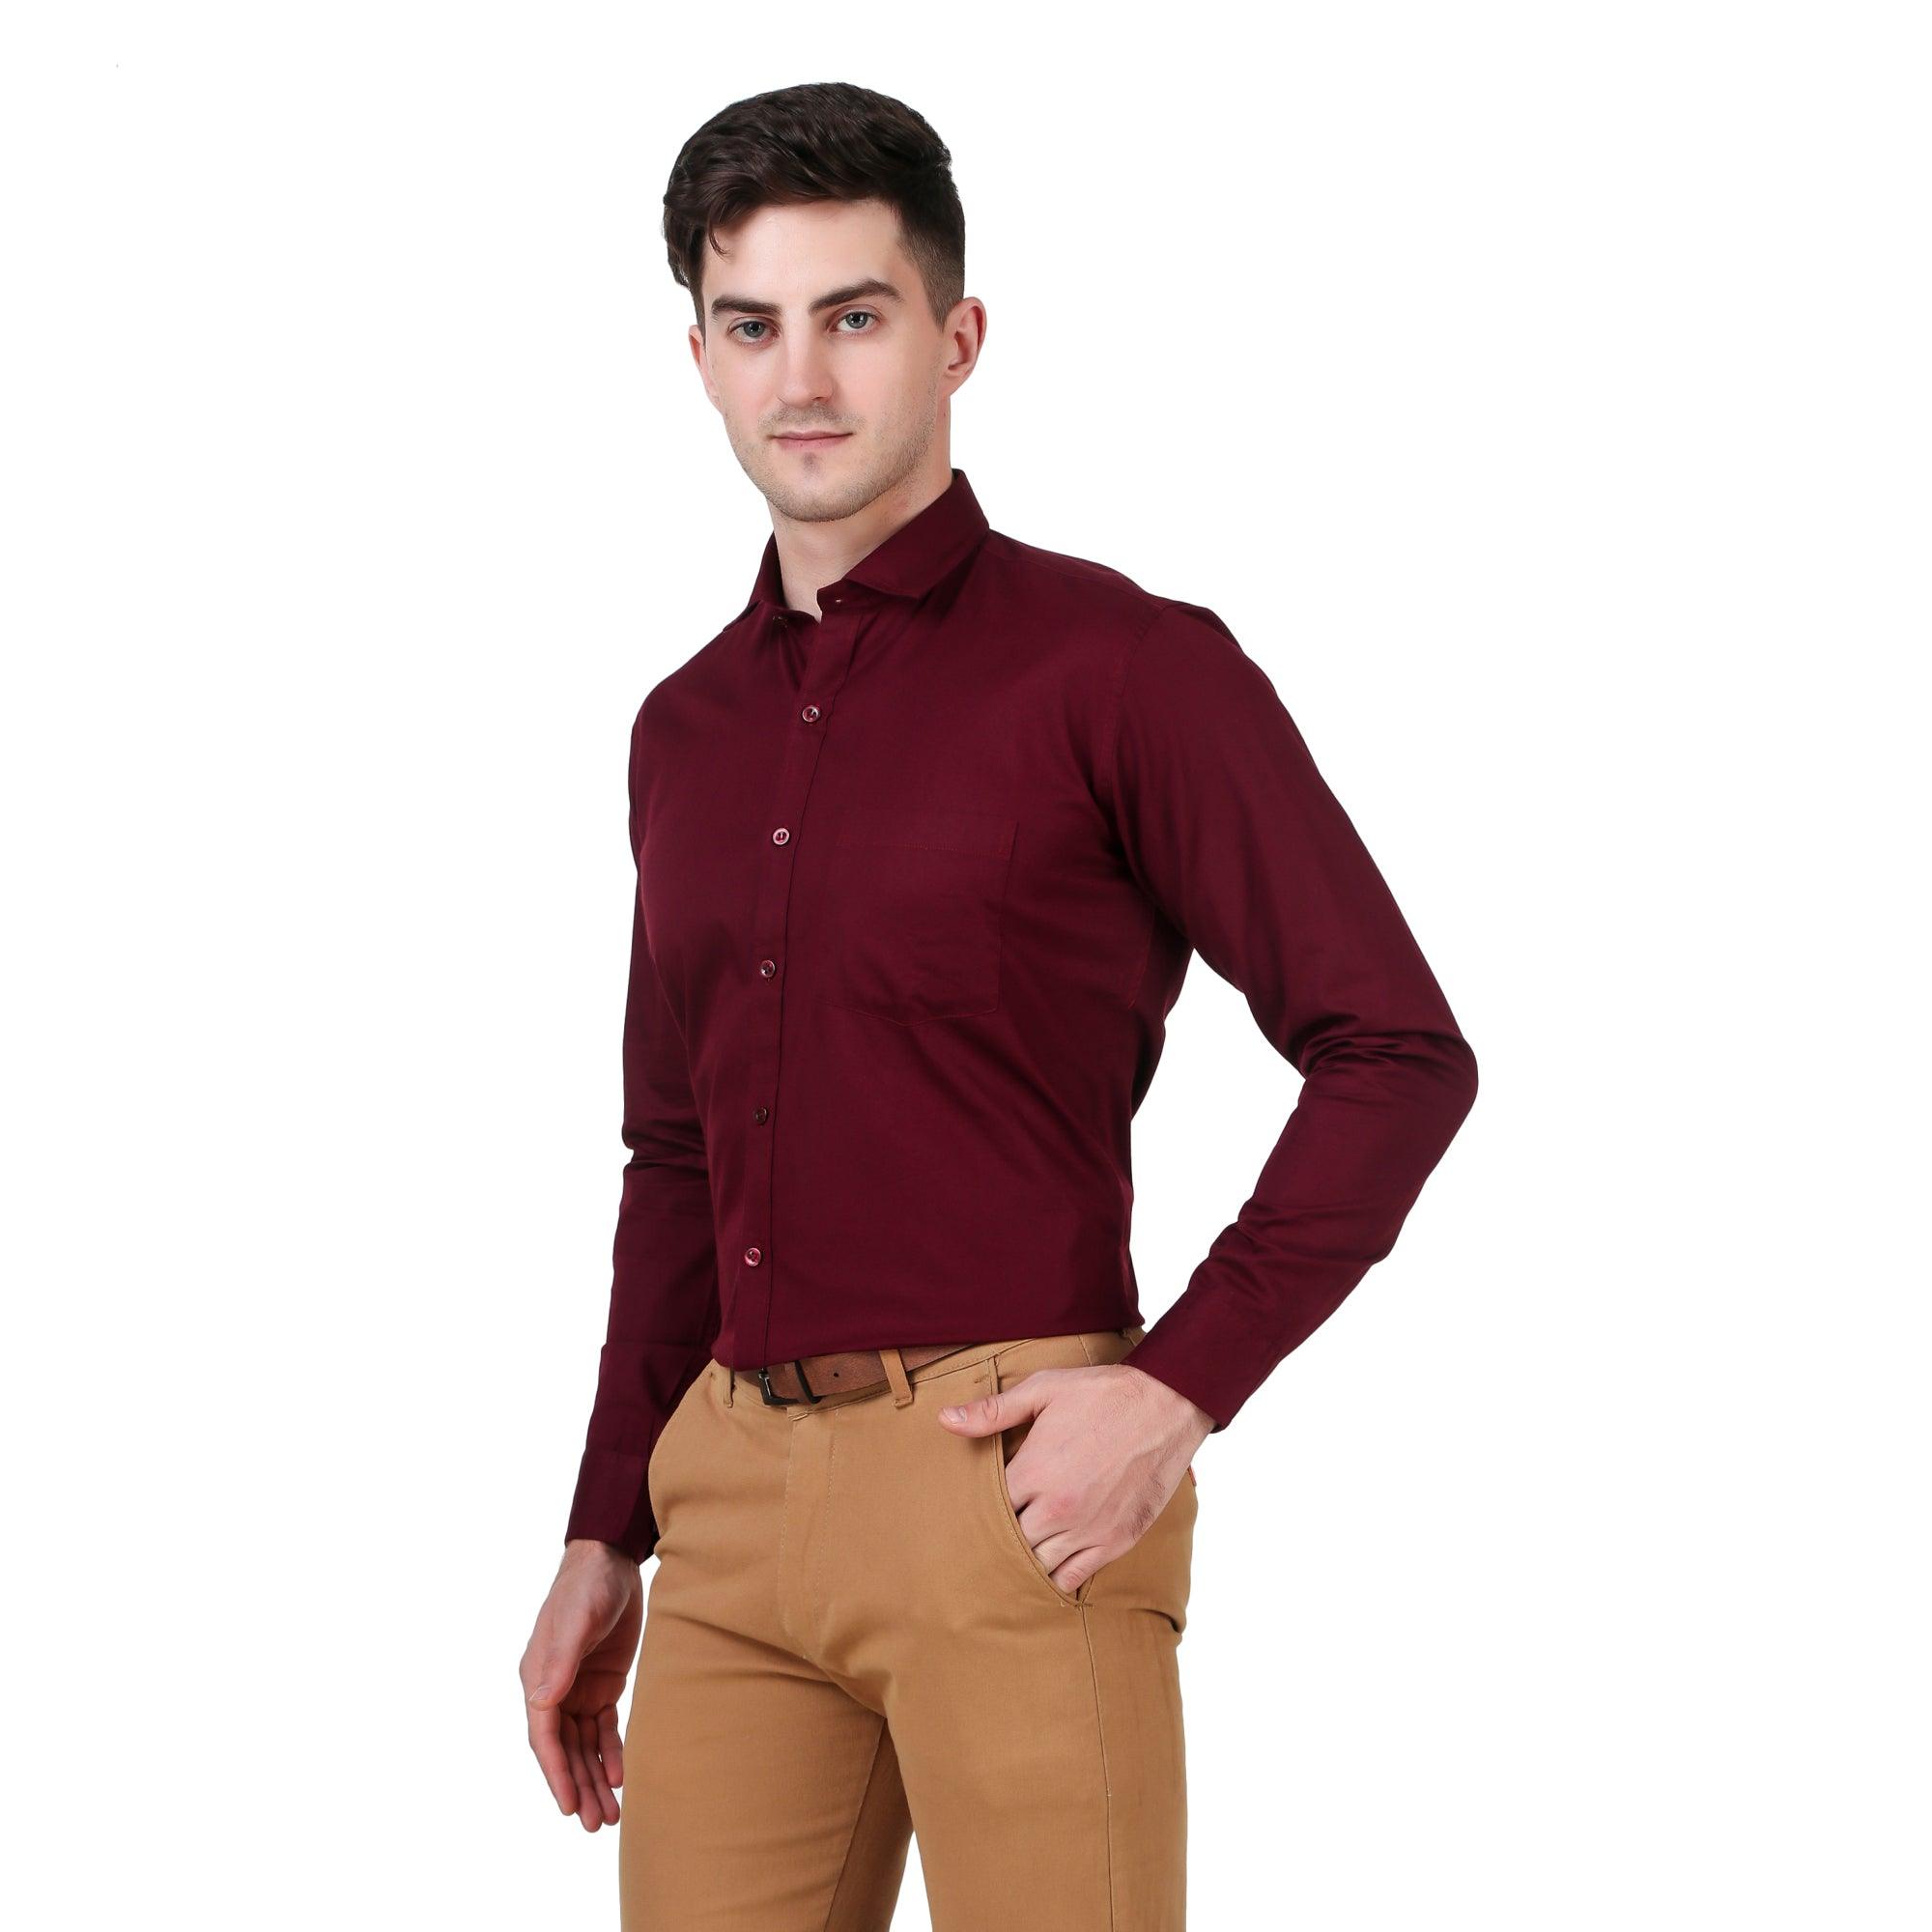 Maroon Color 100% Cotton Spread Collar Shirt - The Fineworld